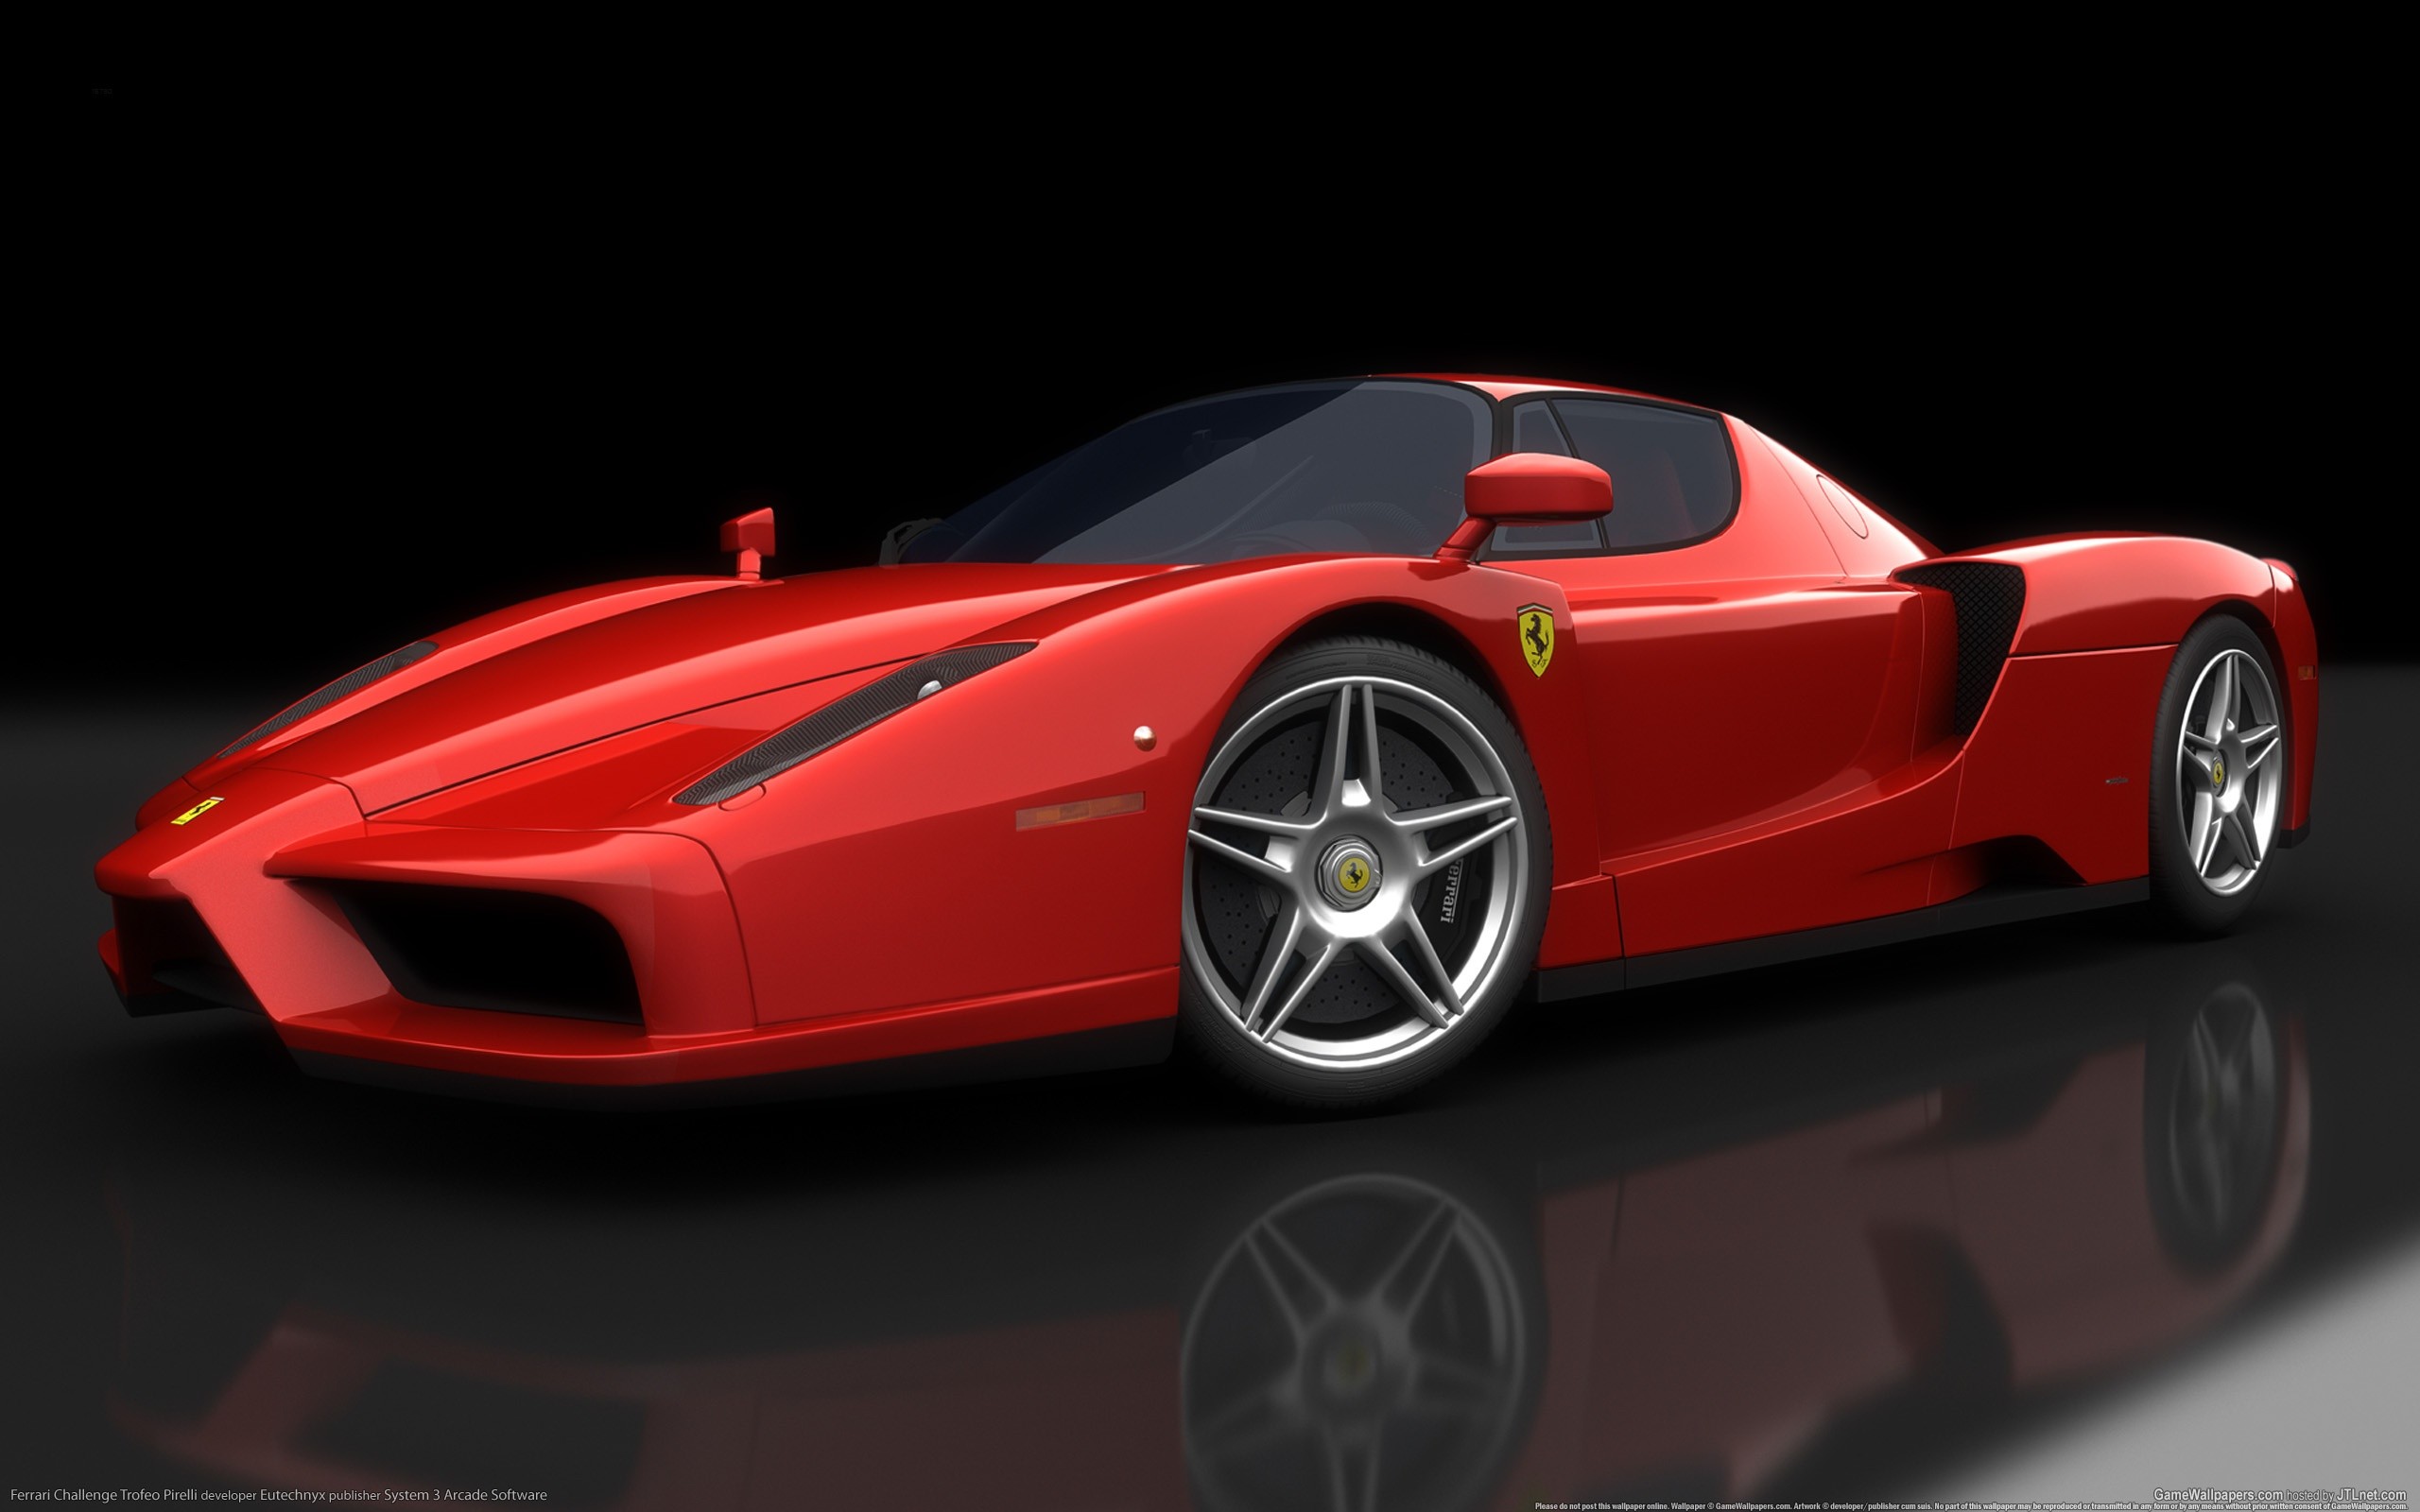 2560x1600 2 Ferrari Challenge Trofeo Pirelli HD Wallpapers | Backgrounds - Wallpaper  Abyss